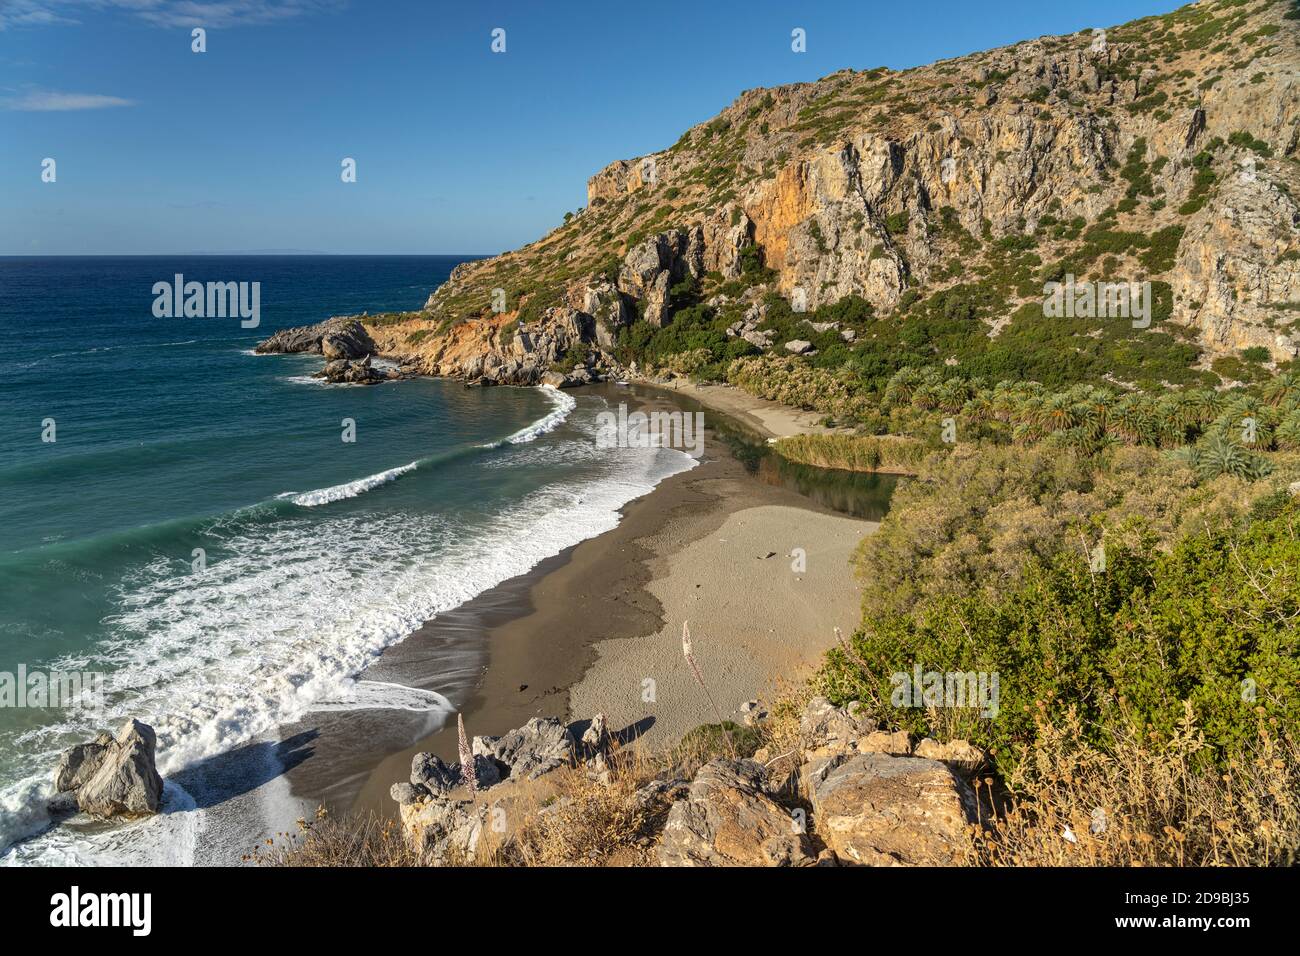 Der Palmenstrand von Preveli, Kreta, Griechenland, Europa   |  Preveli Palm beach, Crete, Greece, Europe Stock Photo